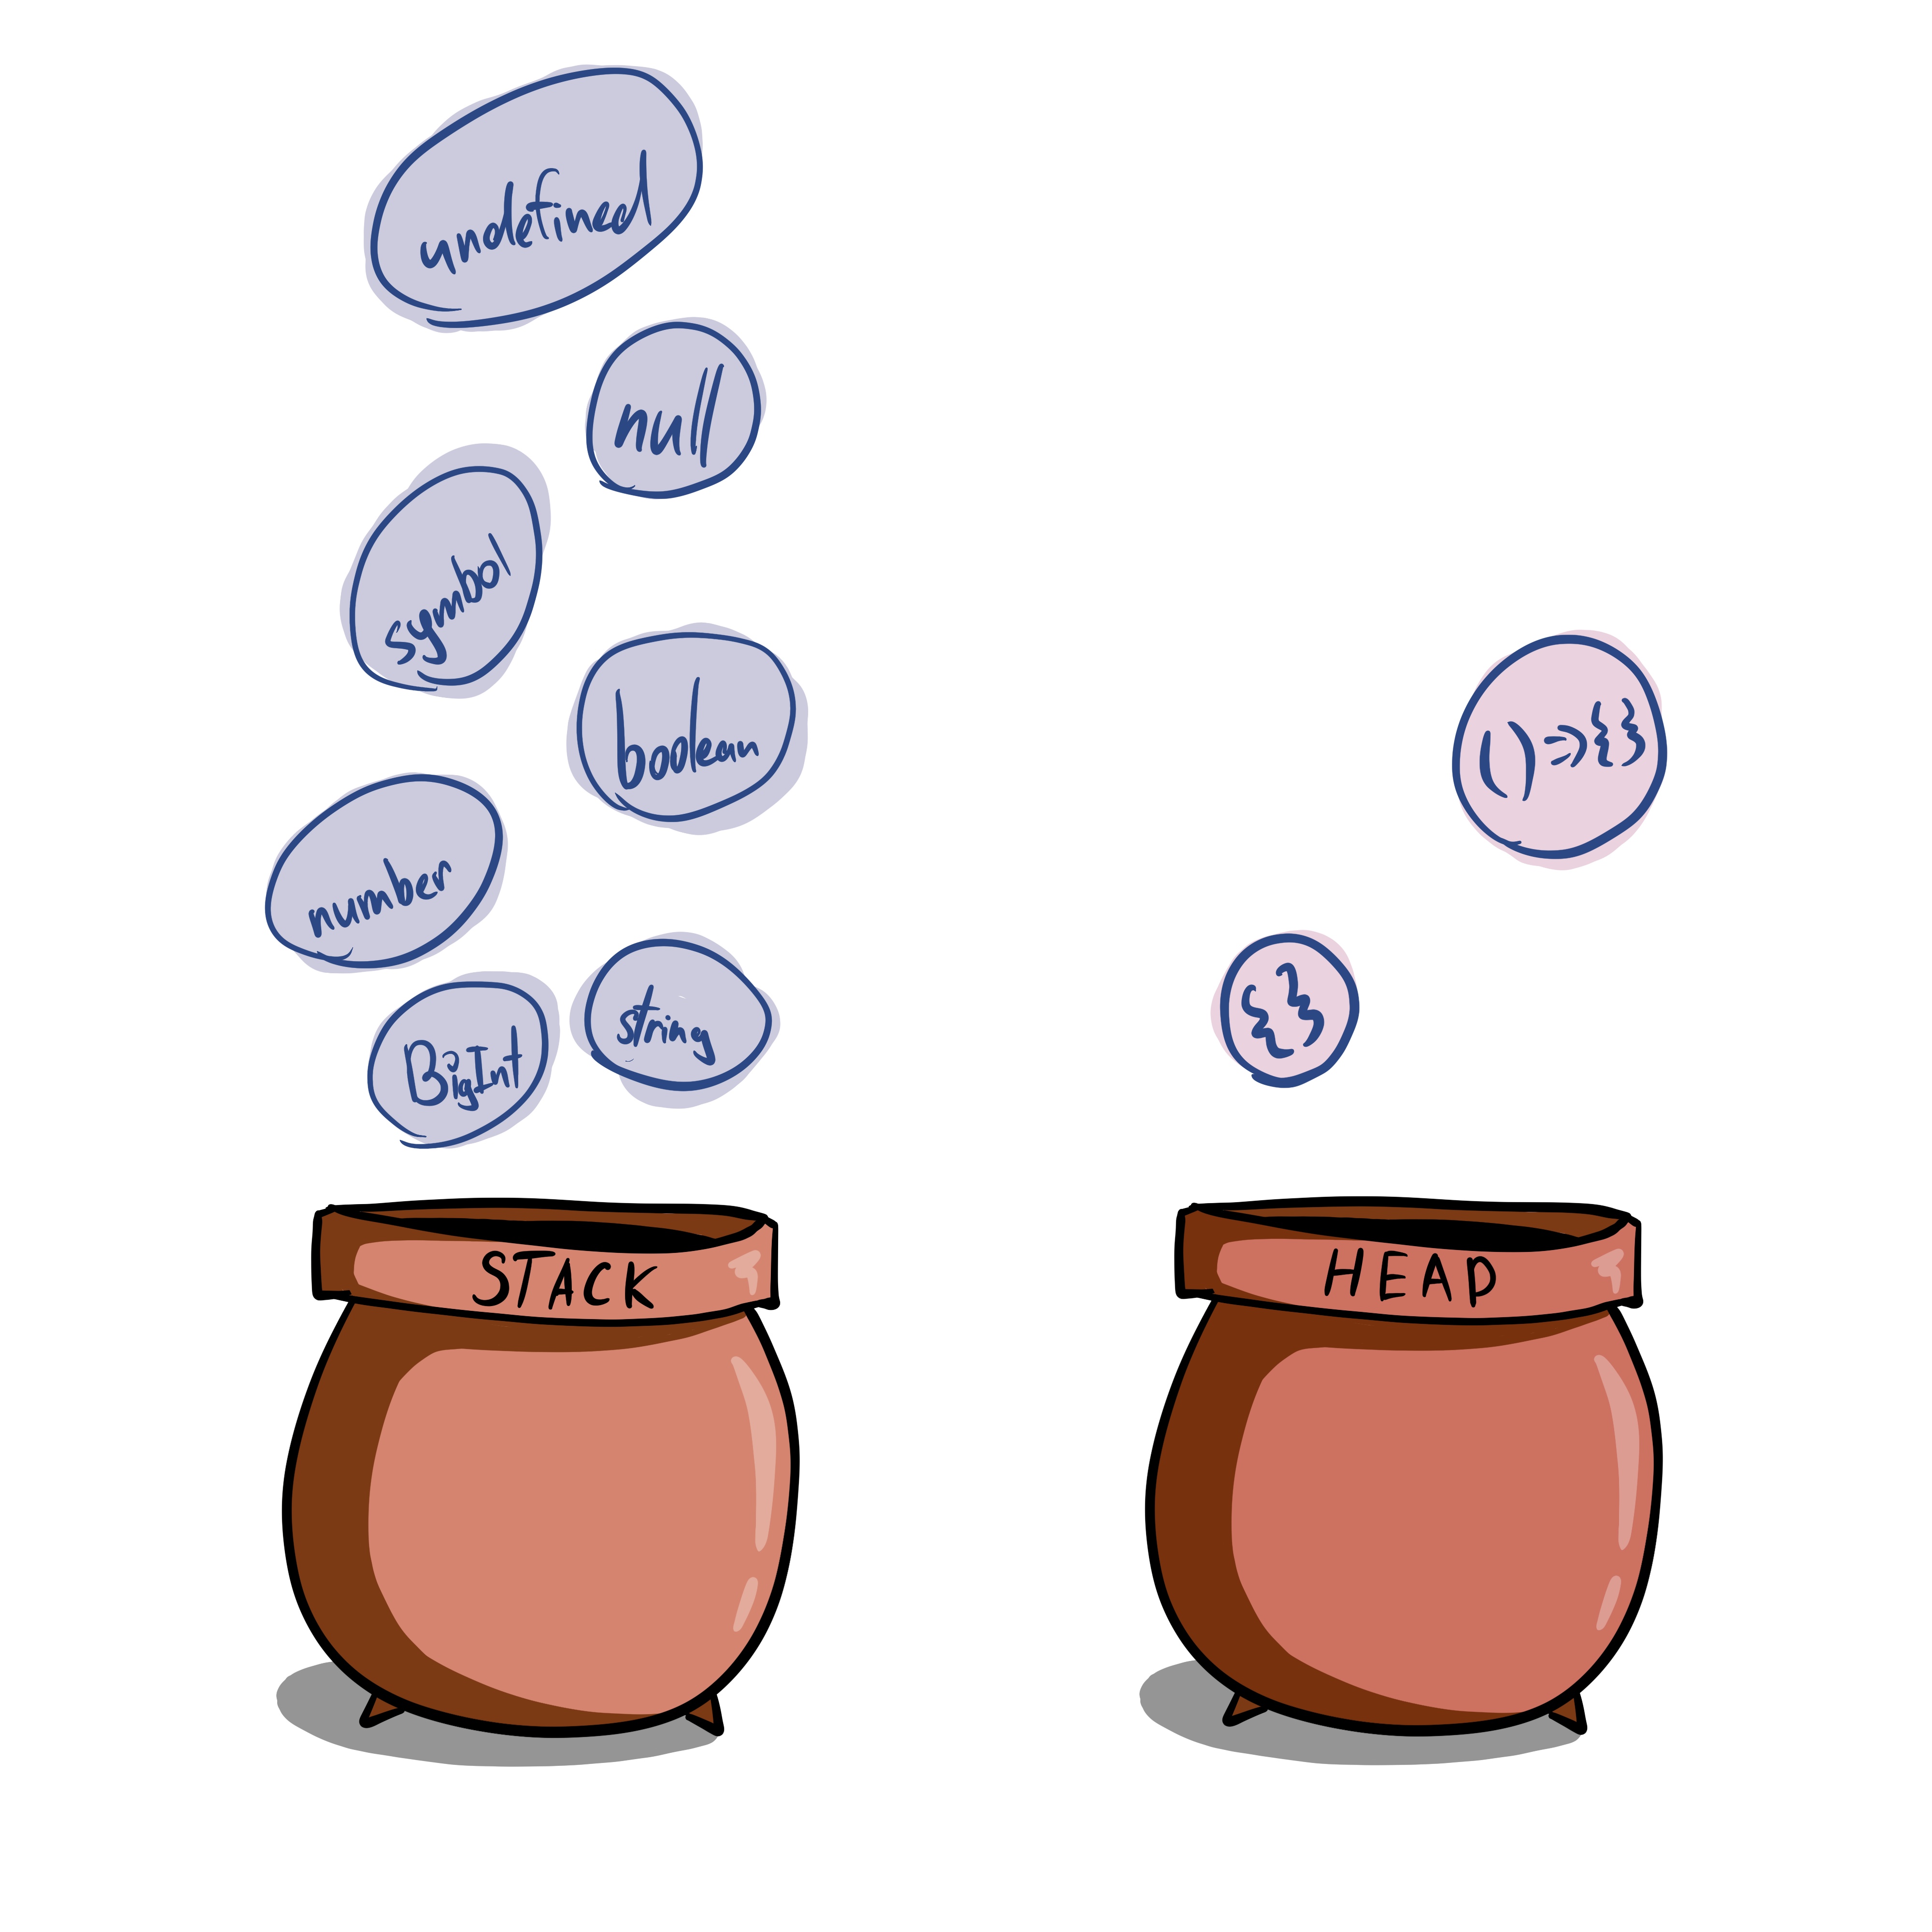 two jars